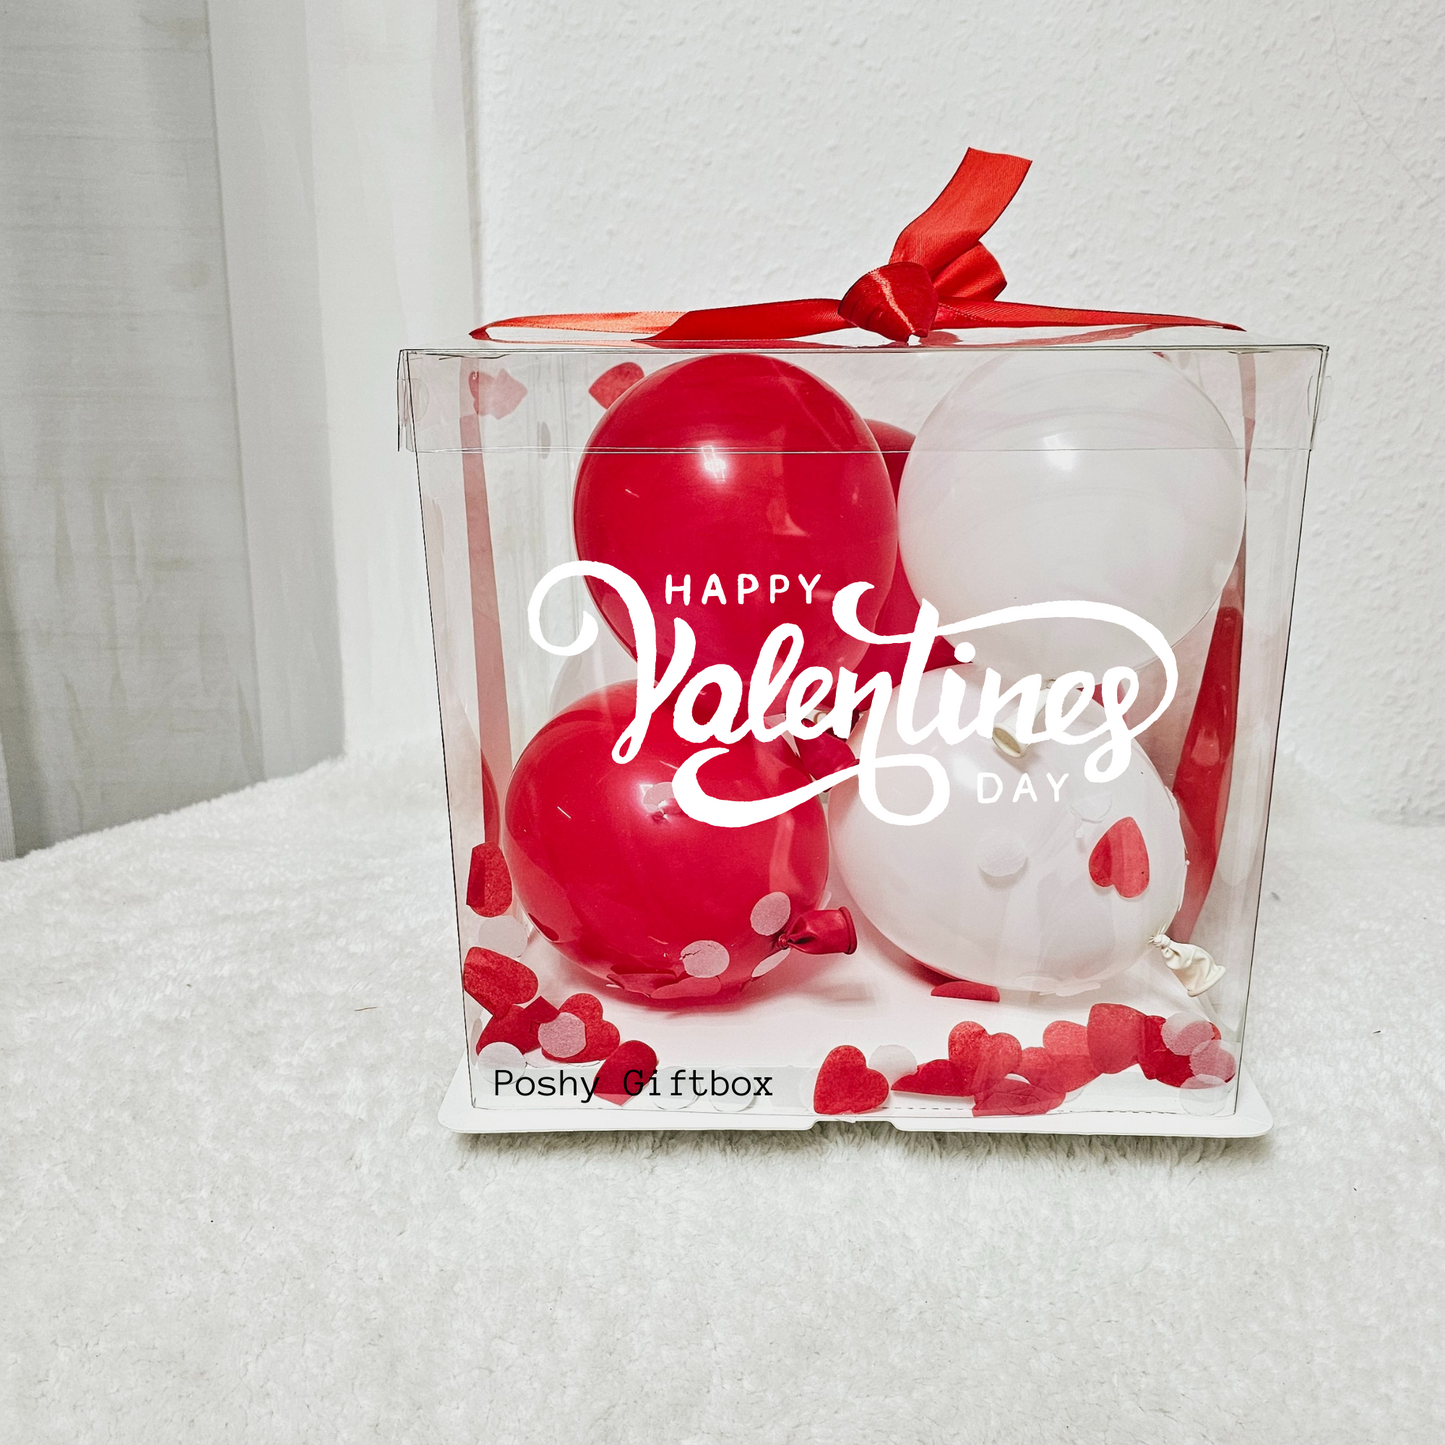 Personalisierte Ballonbox /Geschenkbox Transparent/Wellnessset/Geschenkset Männer/Weihnachtsgeschenk/Geburtstagsgeschenk/Valentinsgeschenk/Geschenk Vatertag PoshyGiftbox